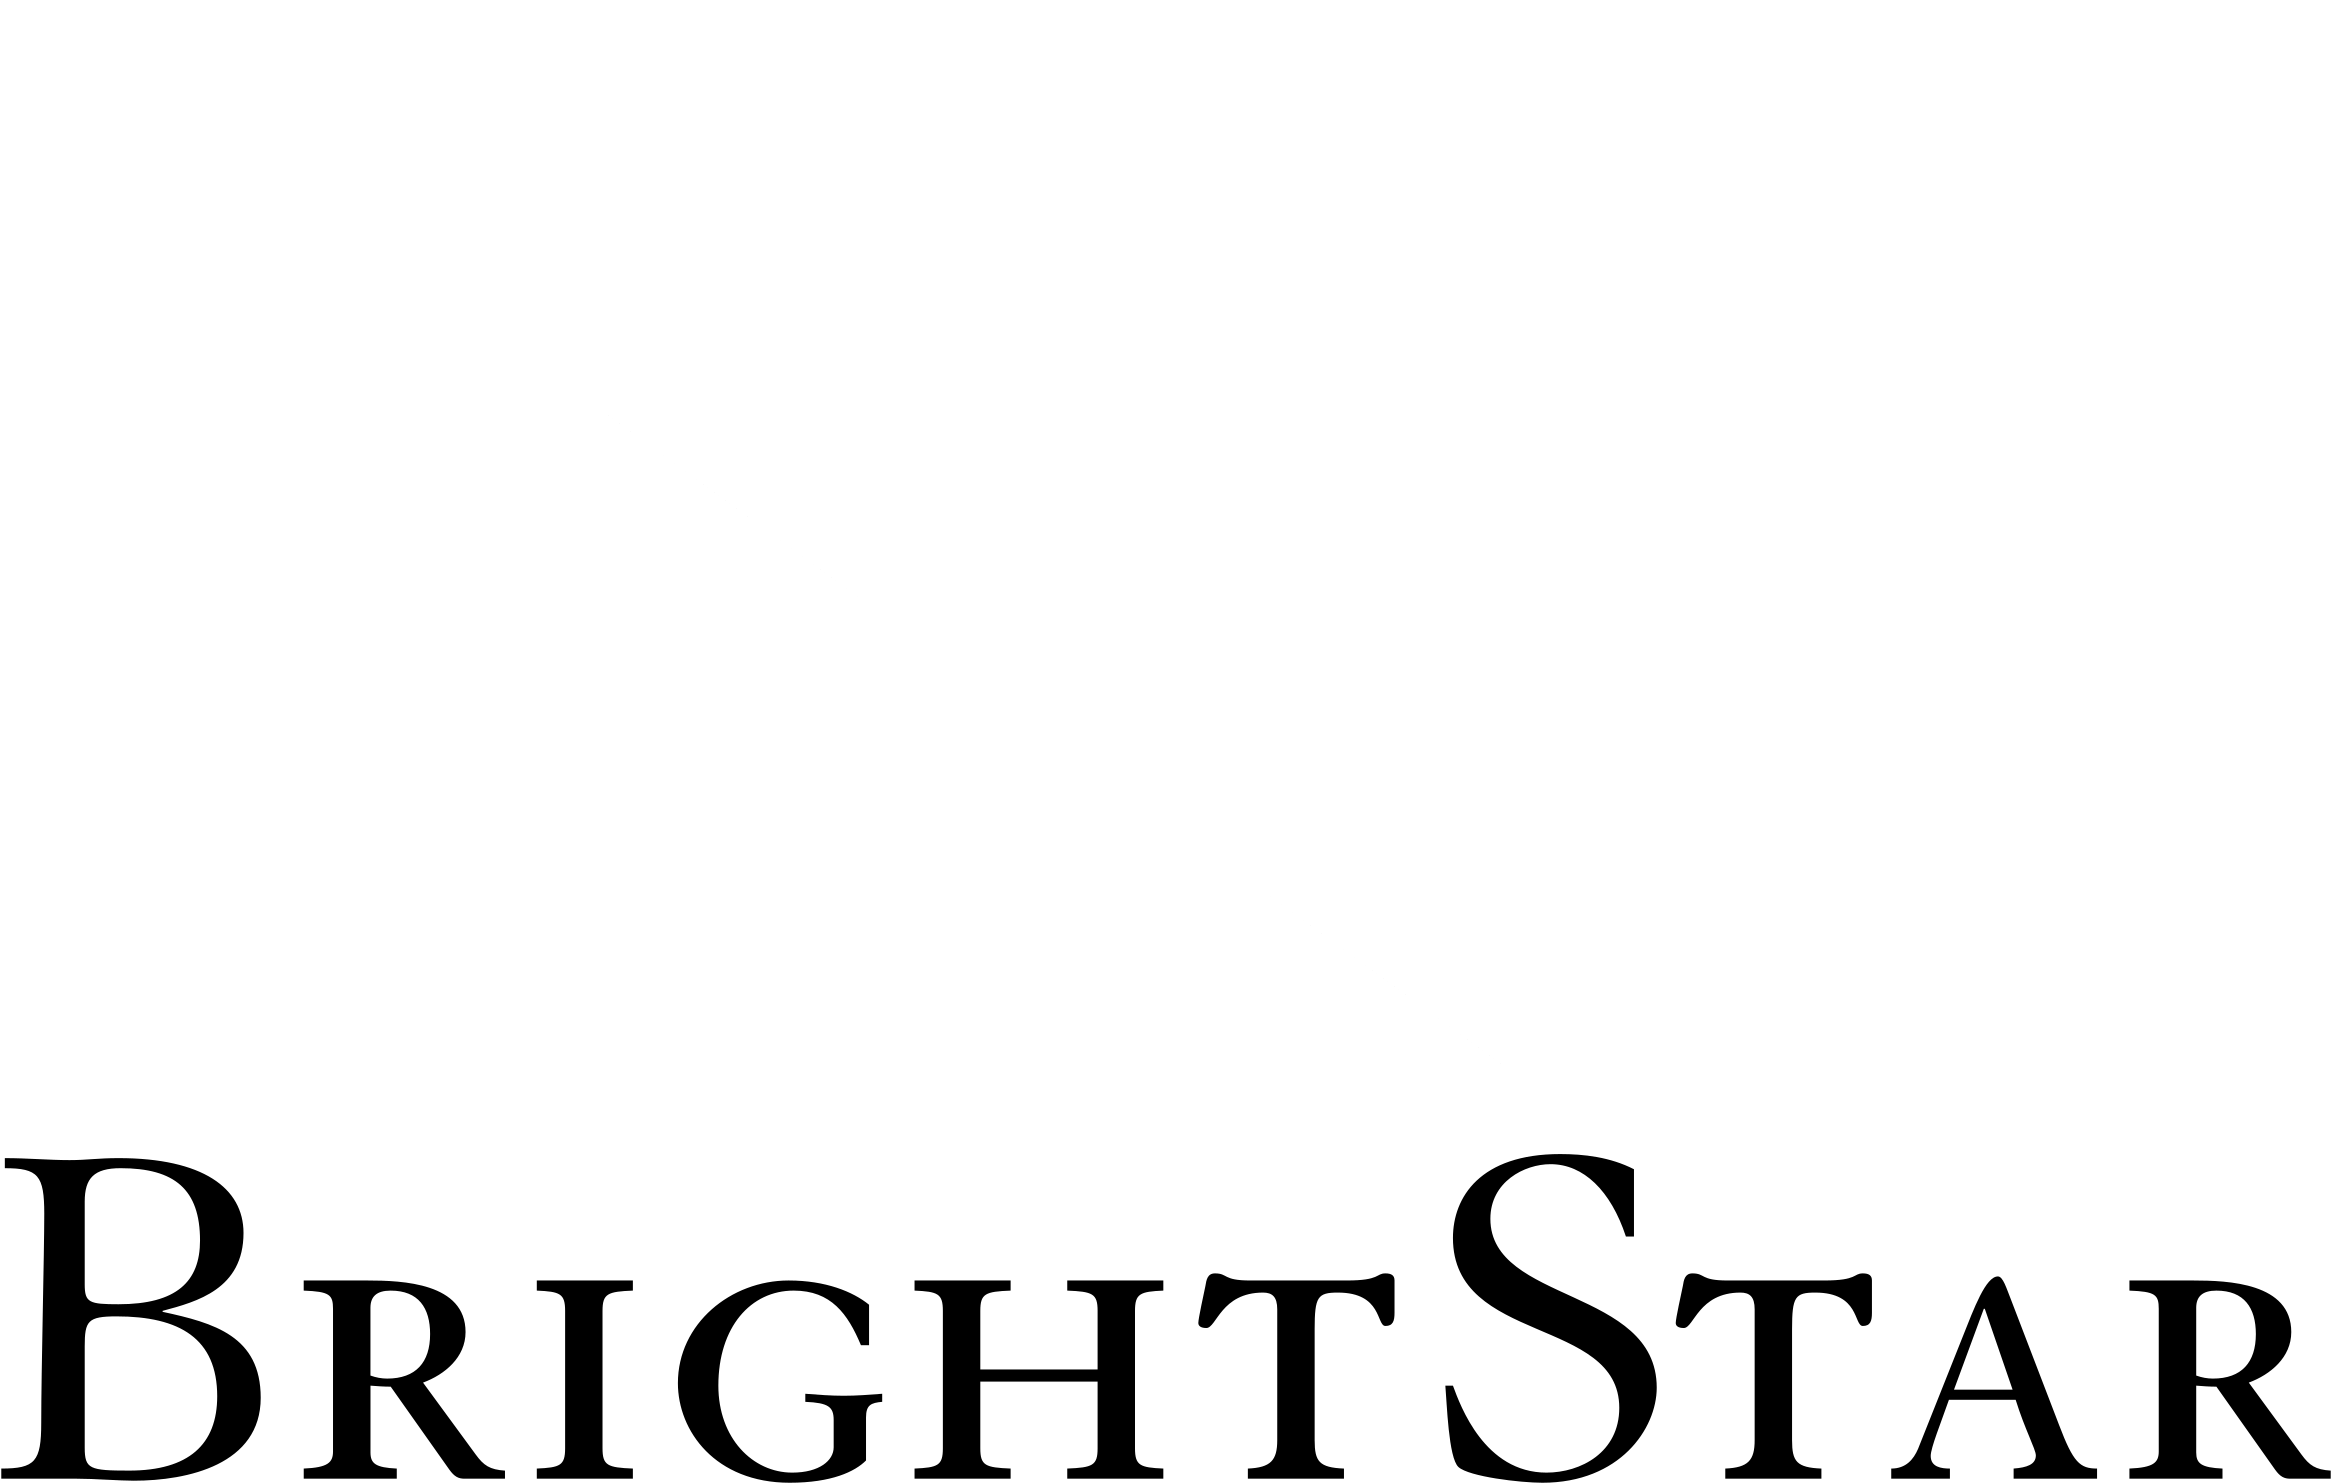 Brightstar Logo Black And White Monochrome